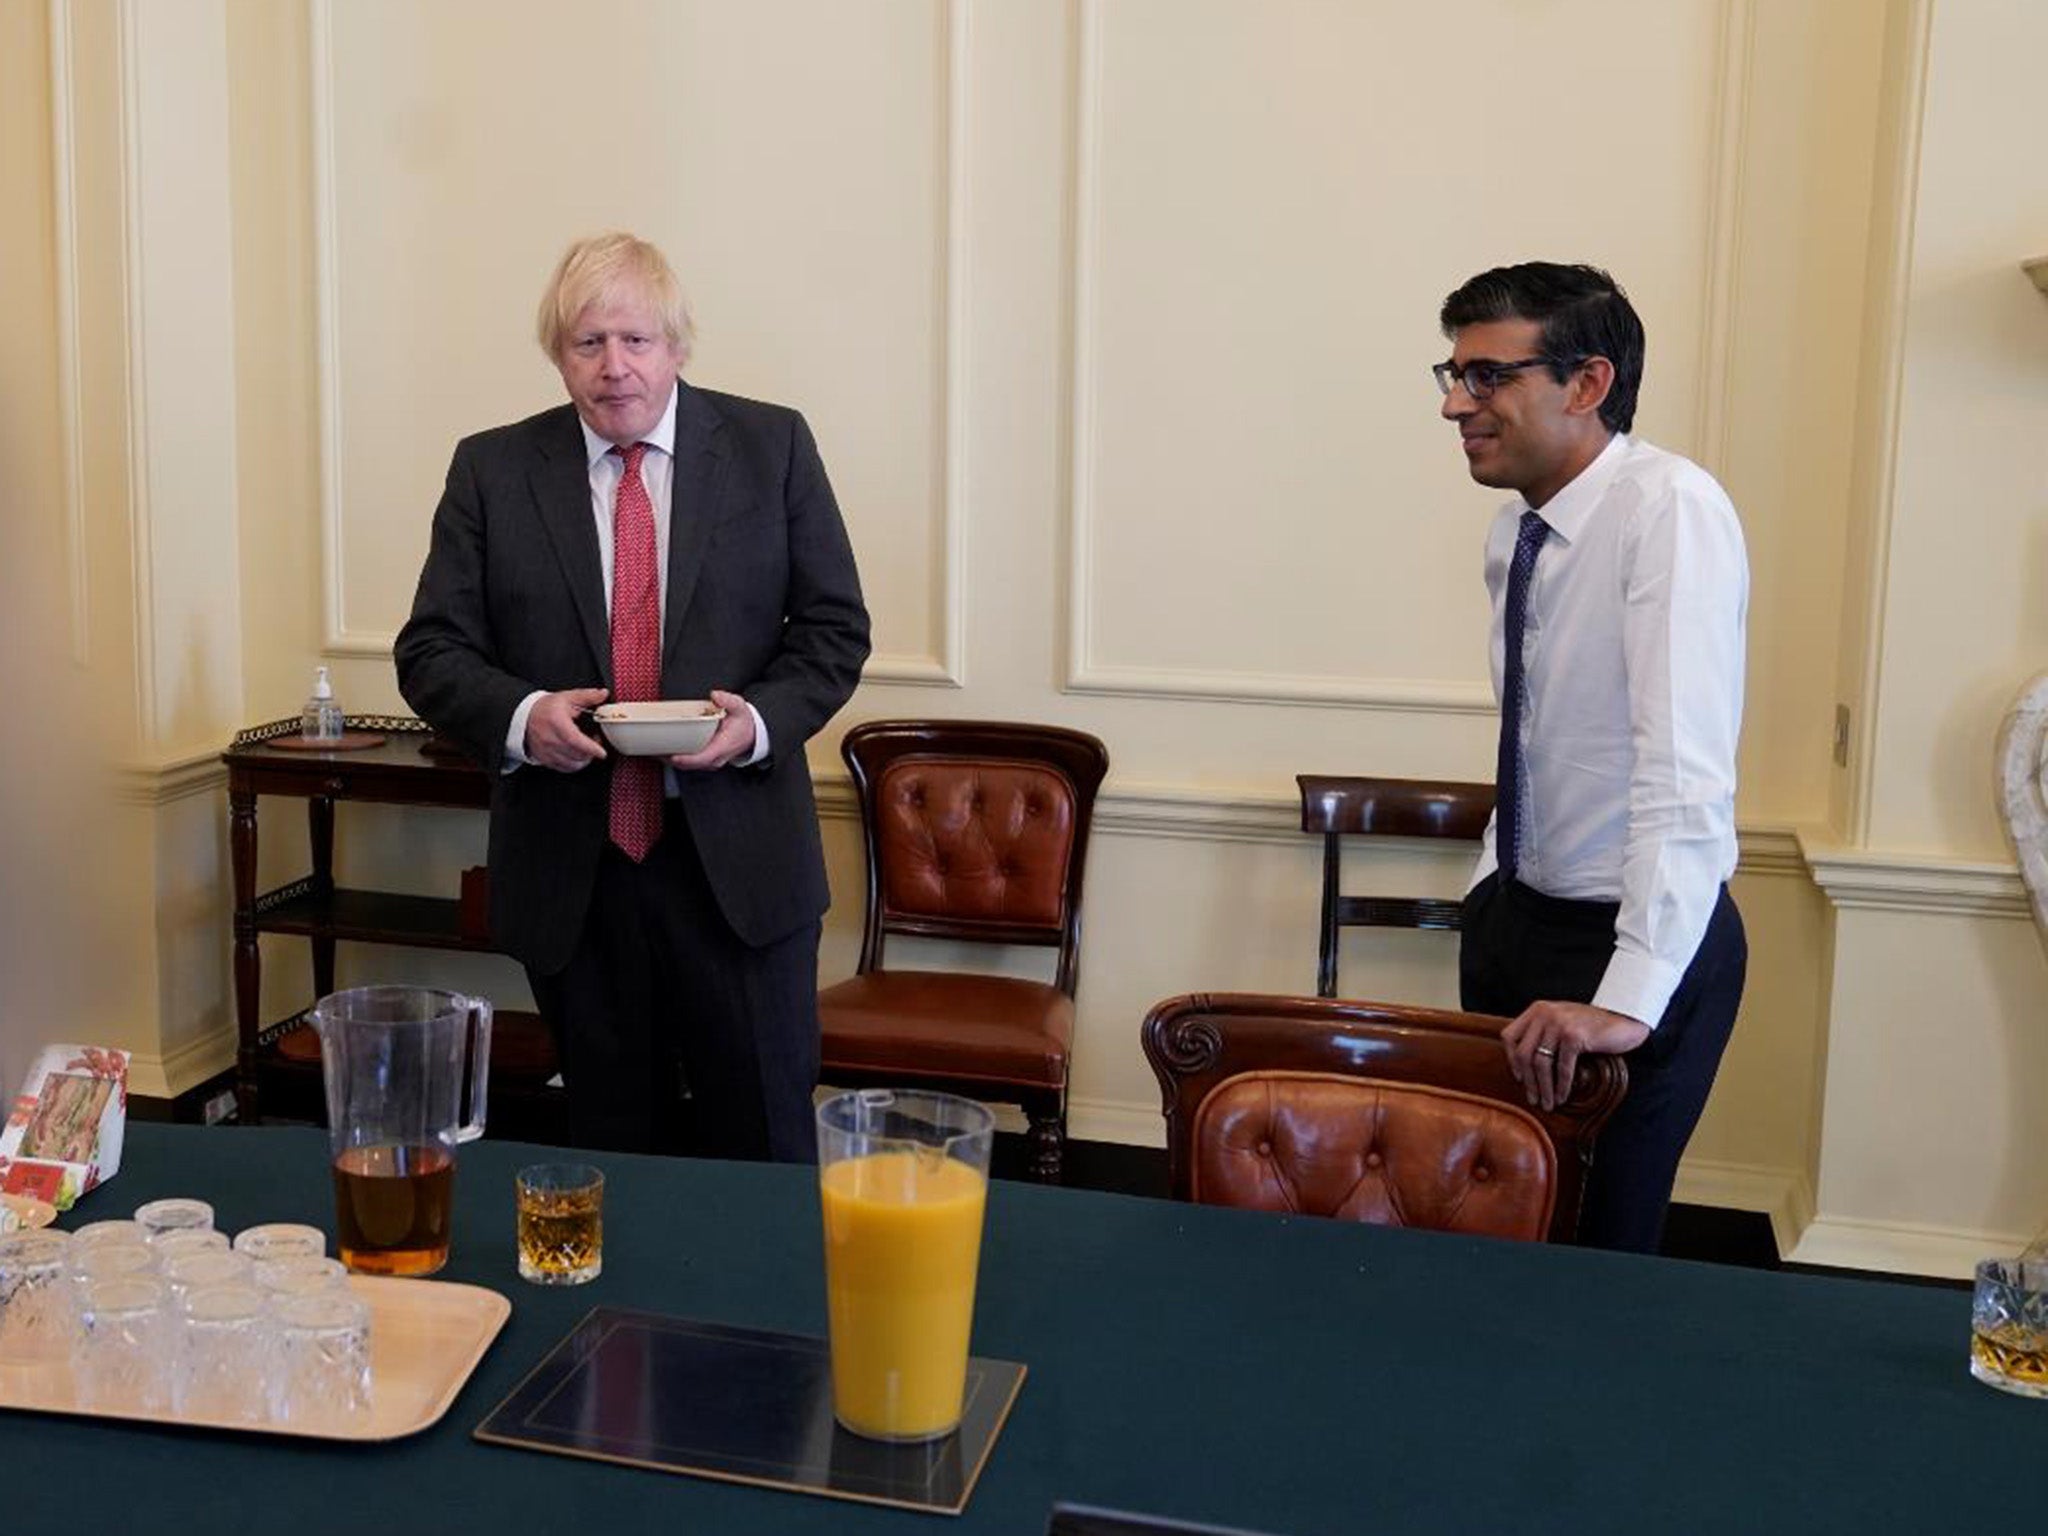 Boris Johnson and Rishi Sunak at rule breaking event at No 10